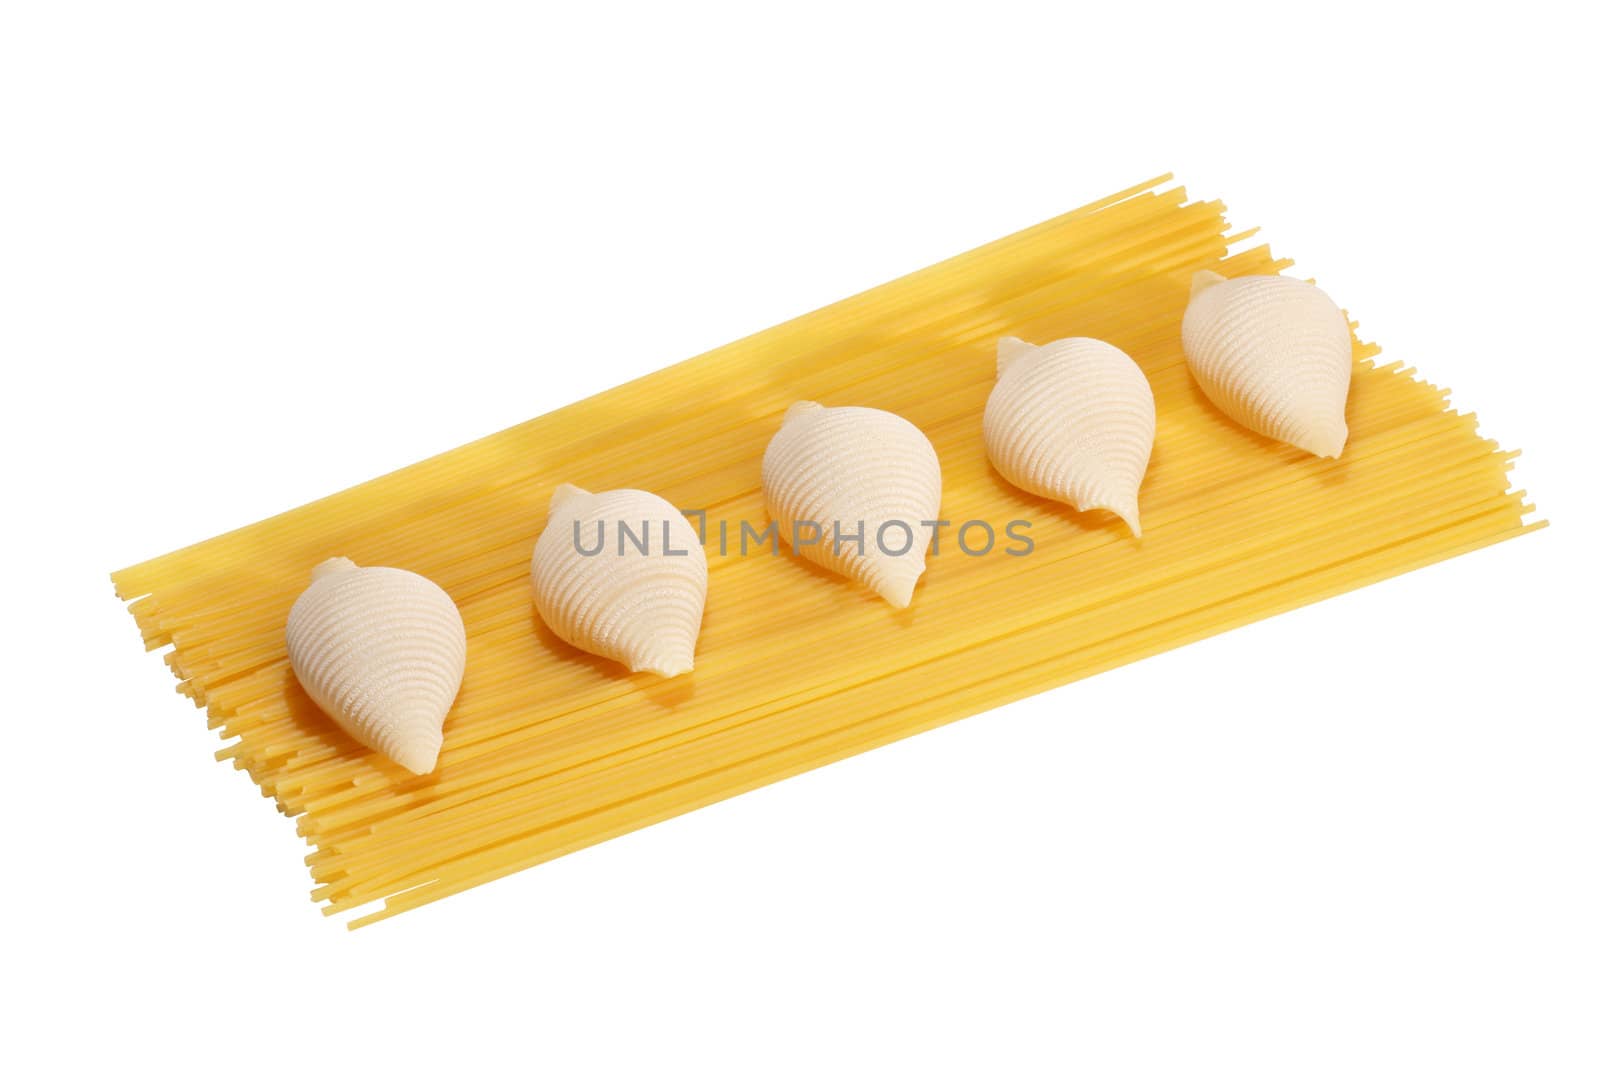 Spaghetti and conchiglie by Dven